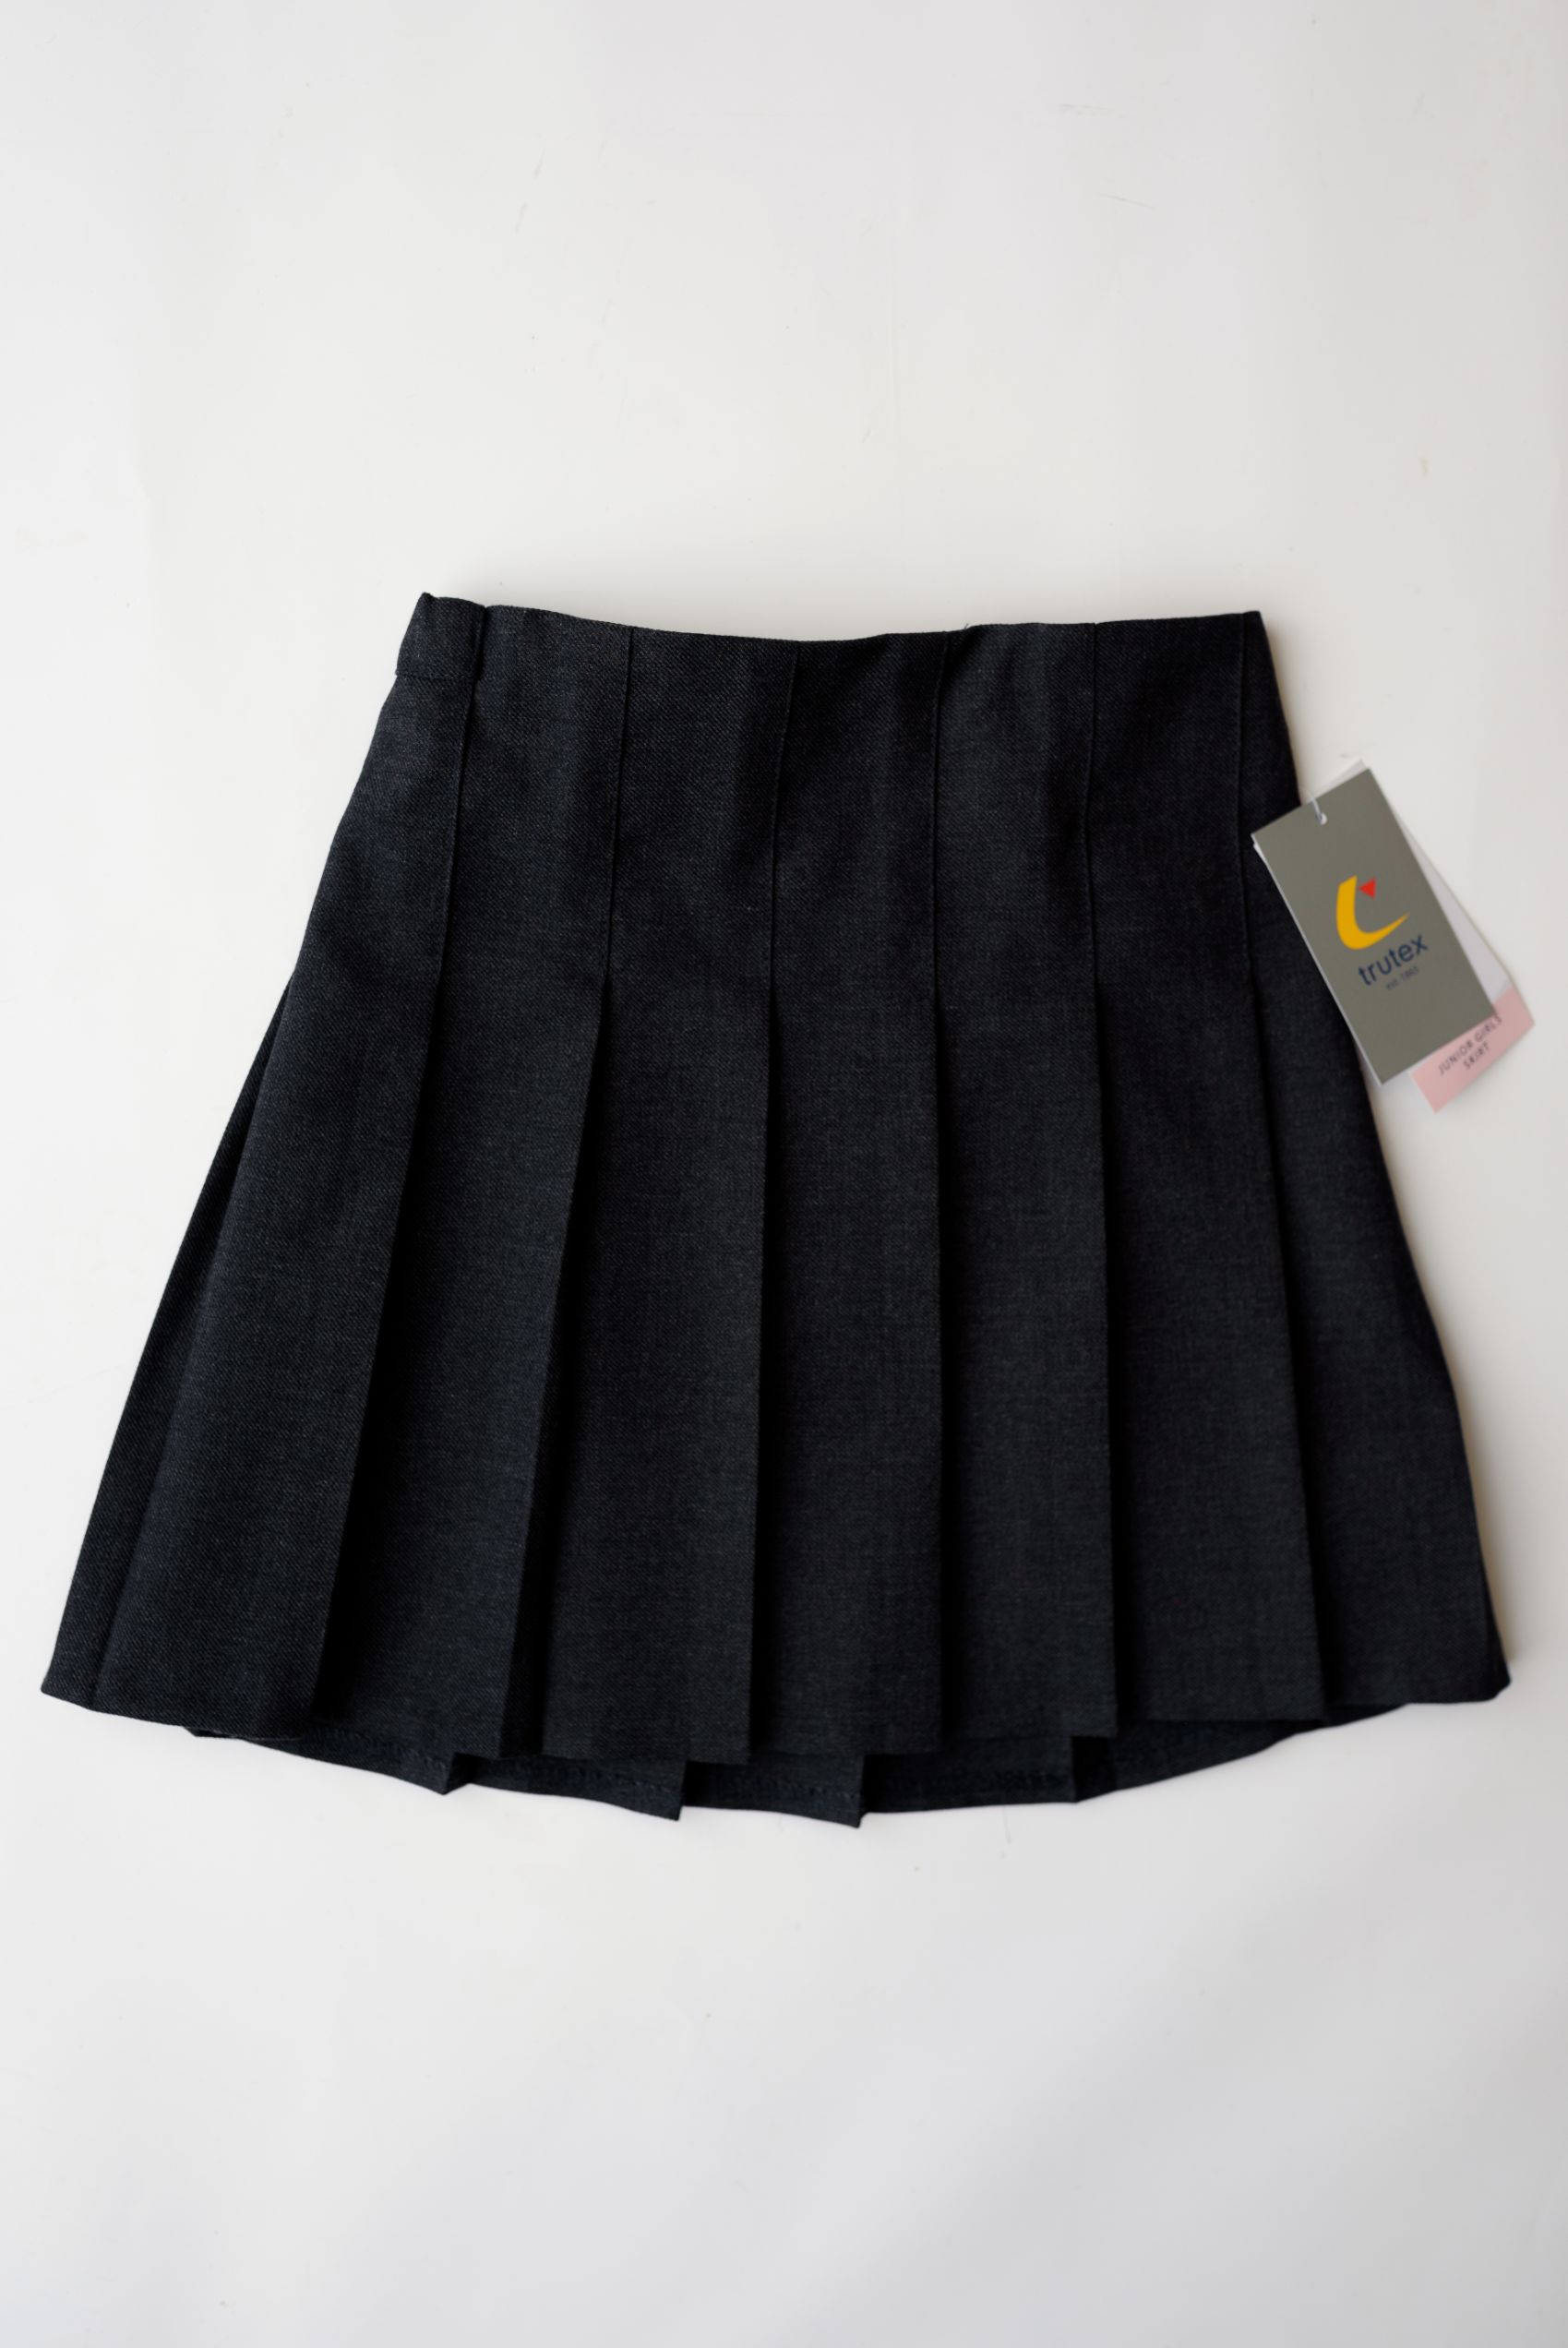 Trutex Pleated grey school skirt